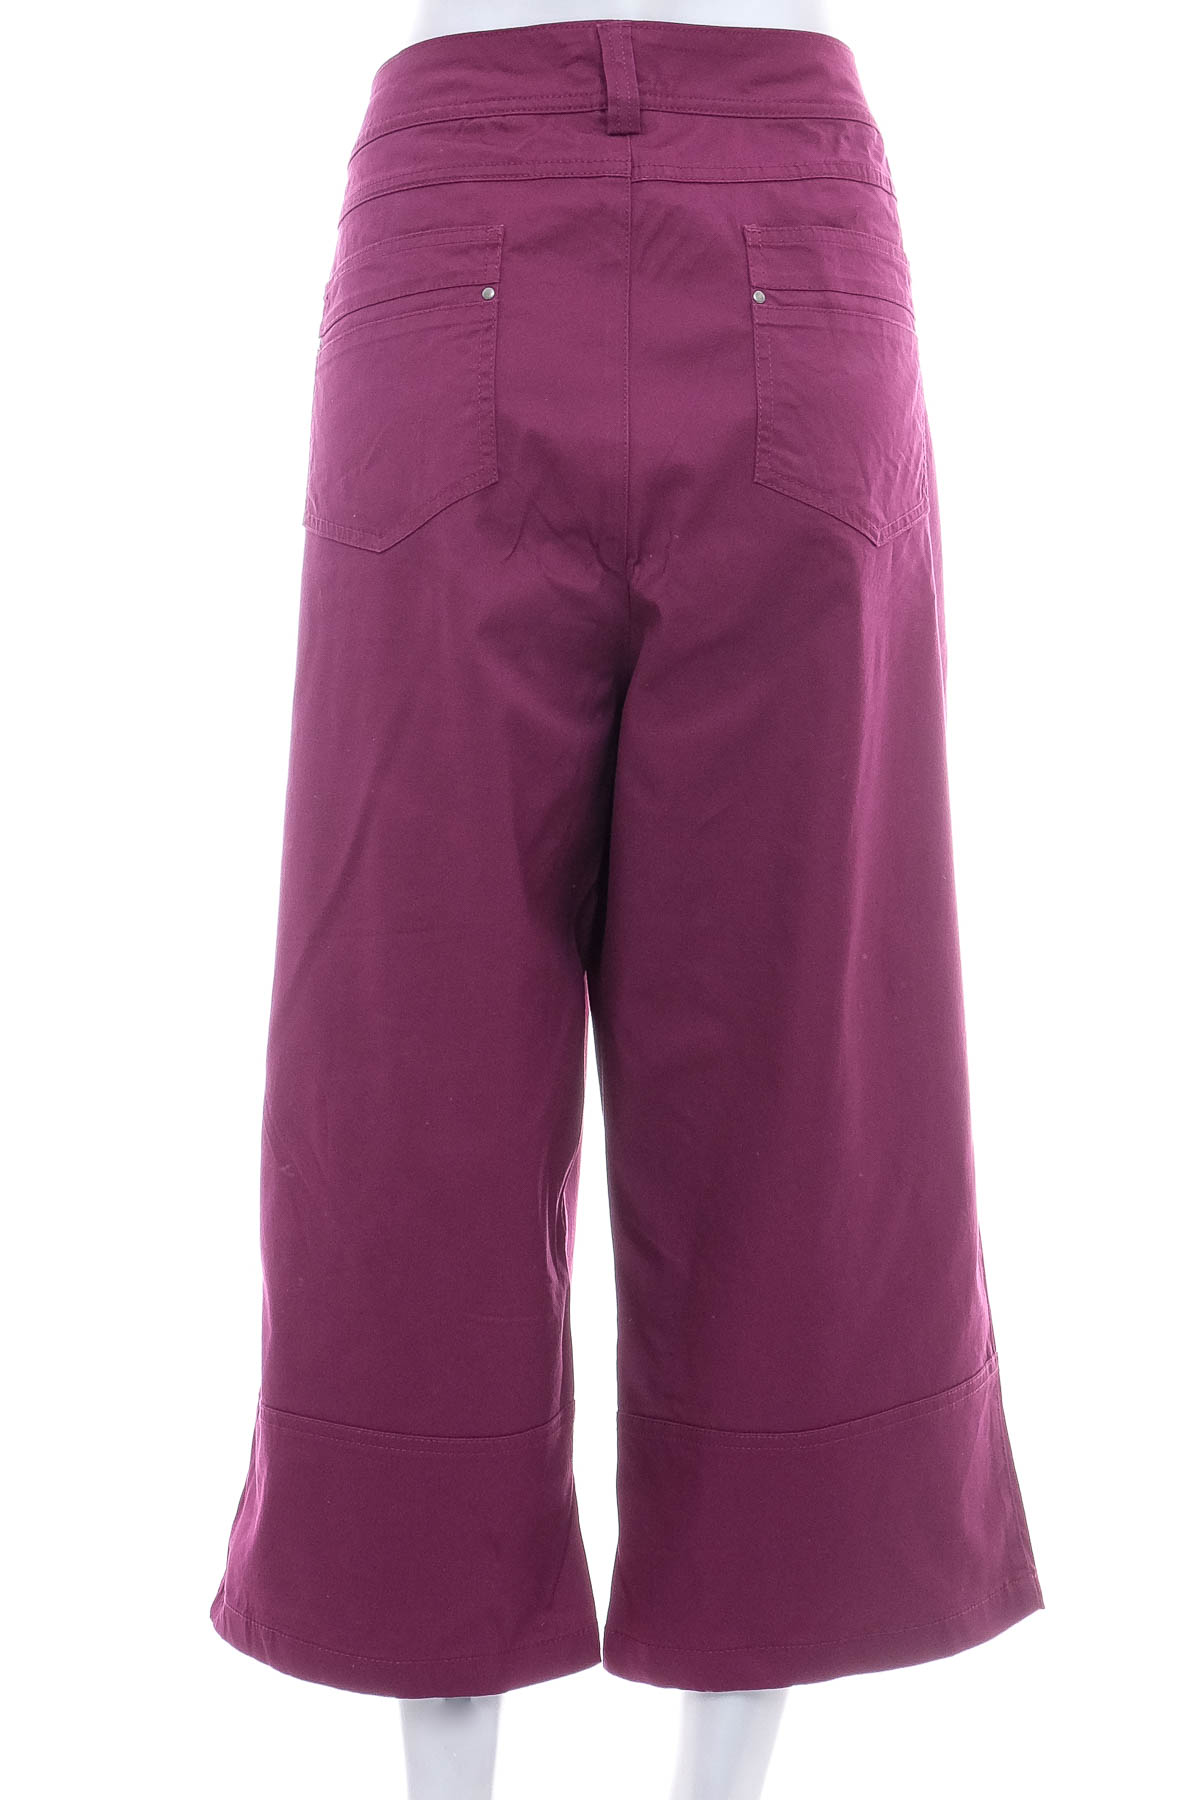 Female shorts - Venezia - 1